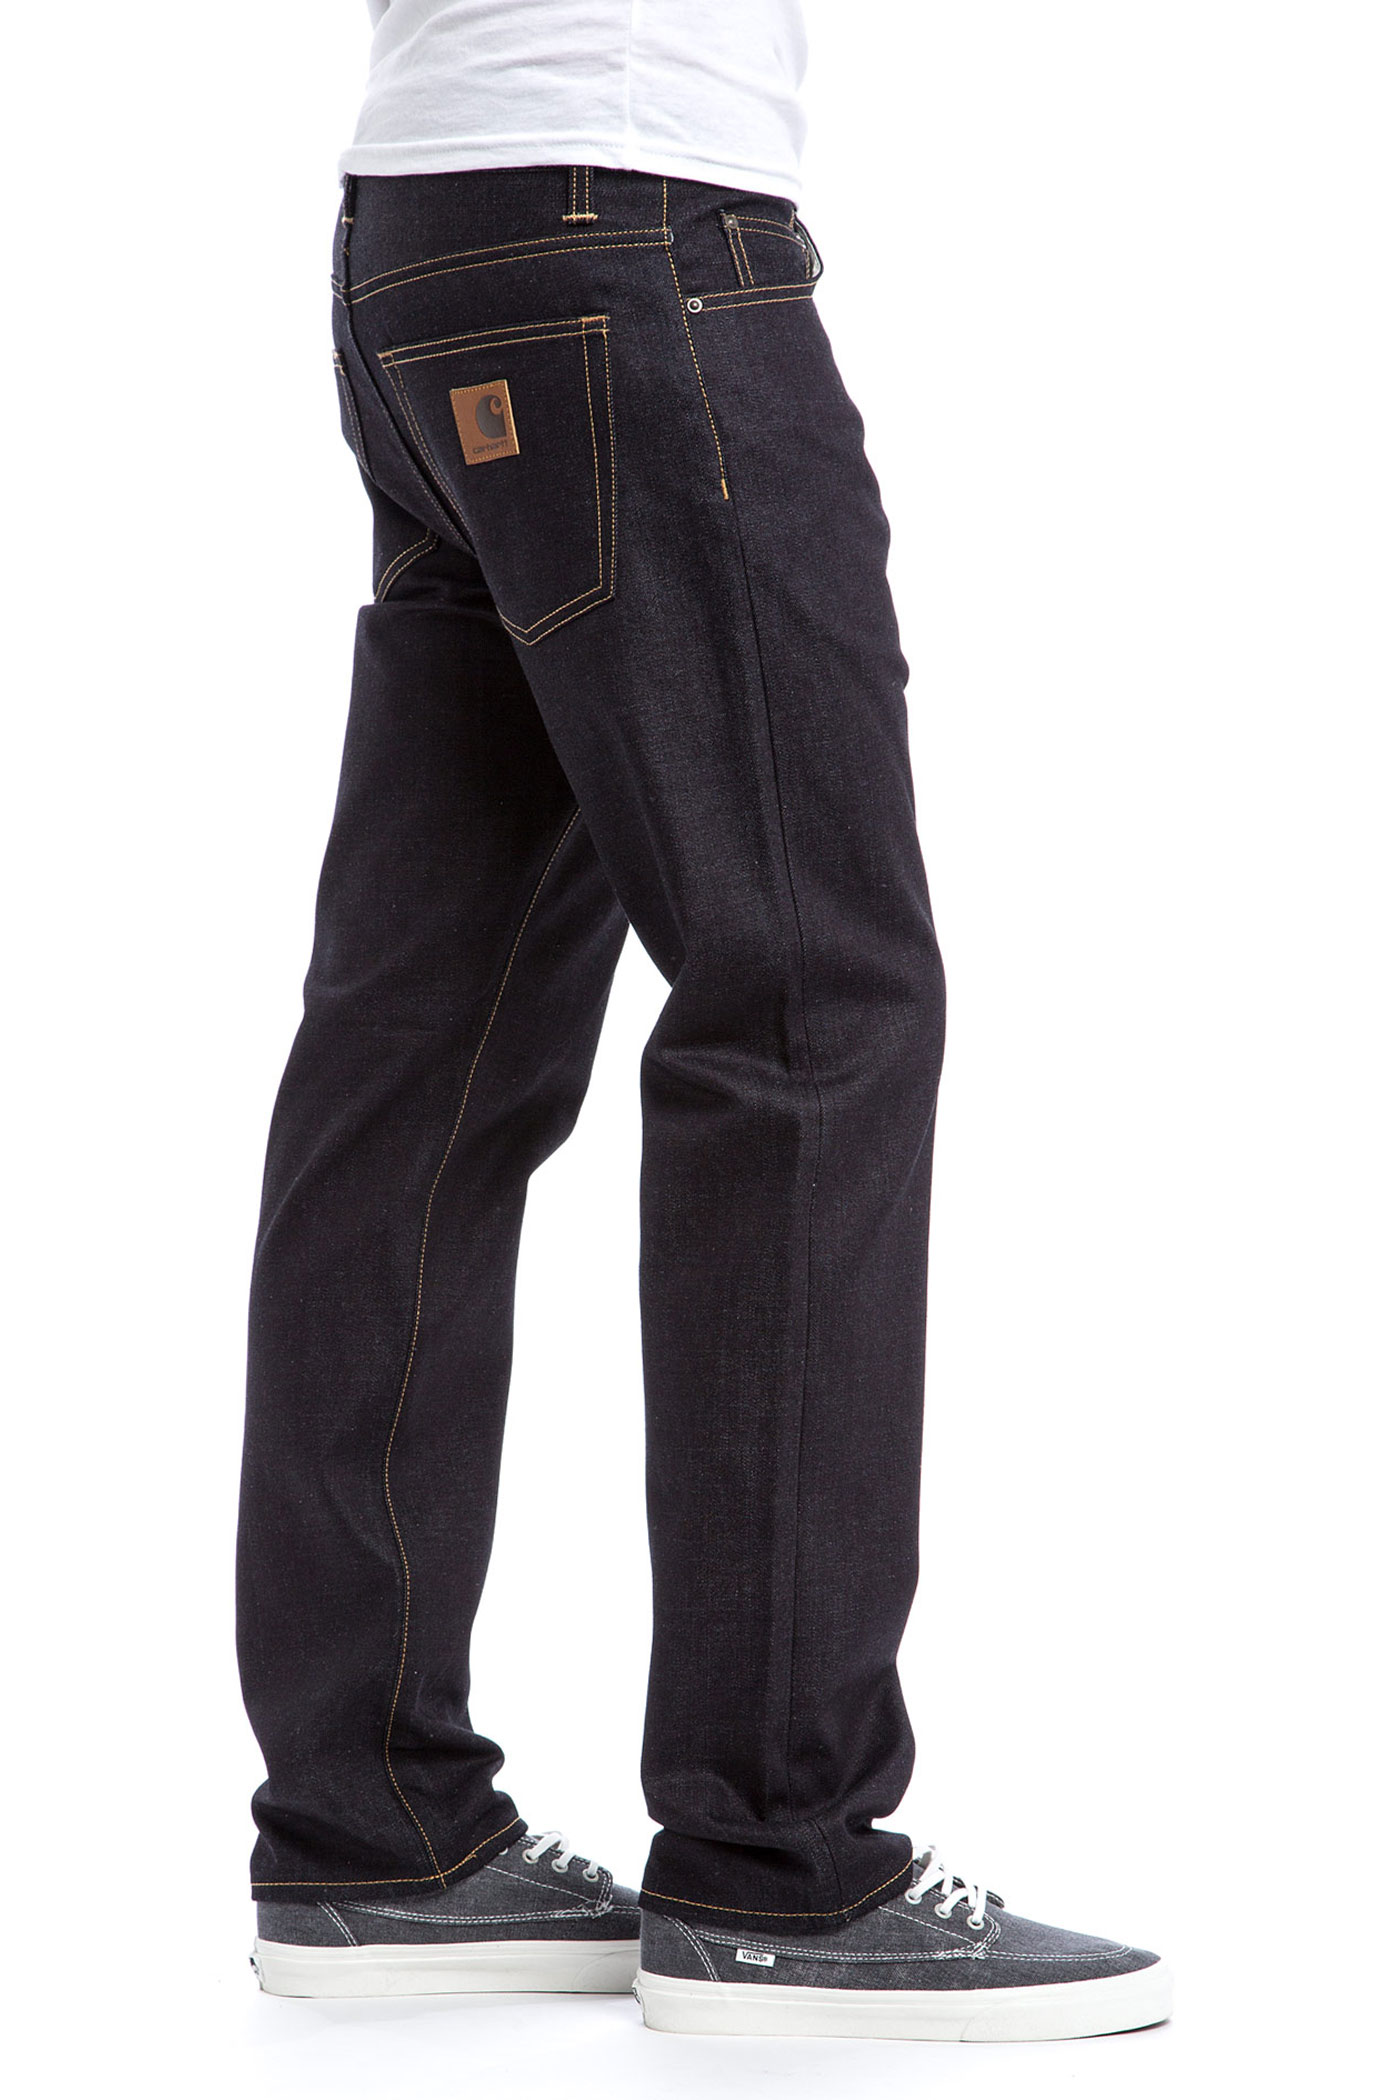 Carhartt WIP Davies Pant Otero Jeans (blue rigid) buy at skatedeluxe